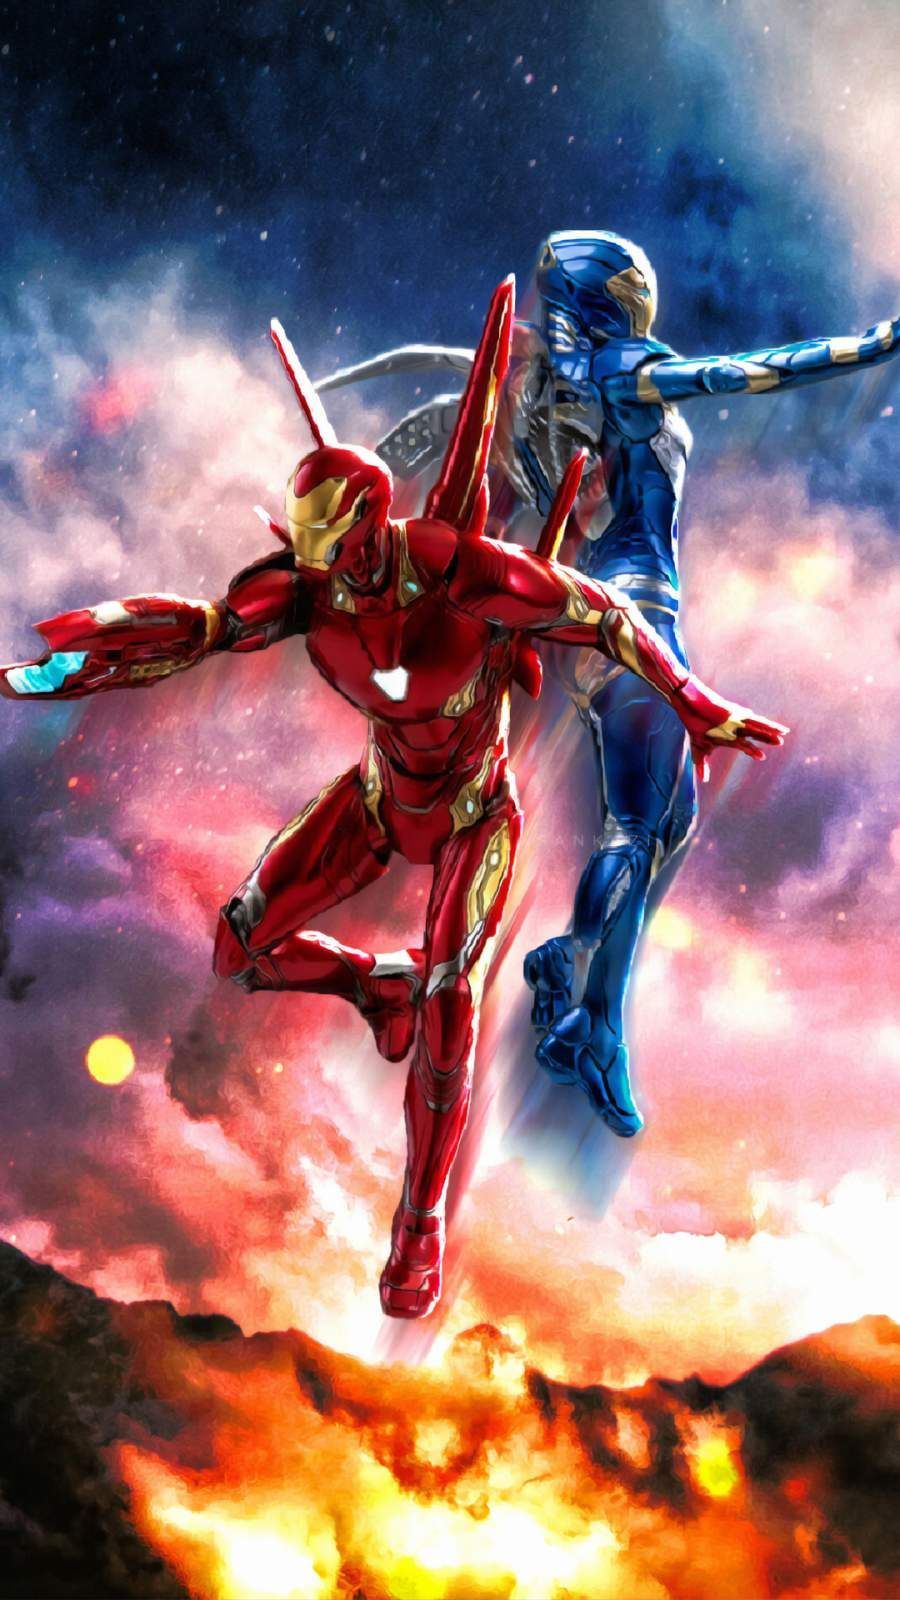 Iron Man and Pepper Potts Rescue Suit iPhone Wallpaper. Iron man art, Marvel superhero posters, Iron man photo